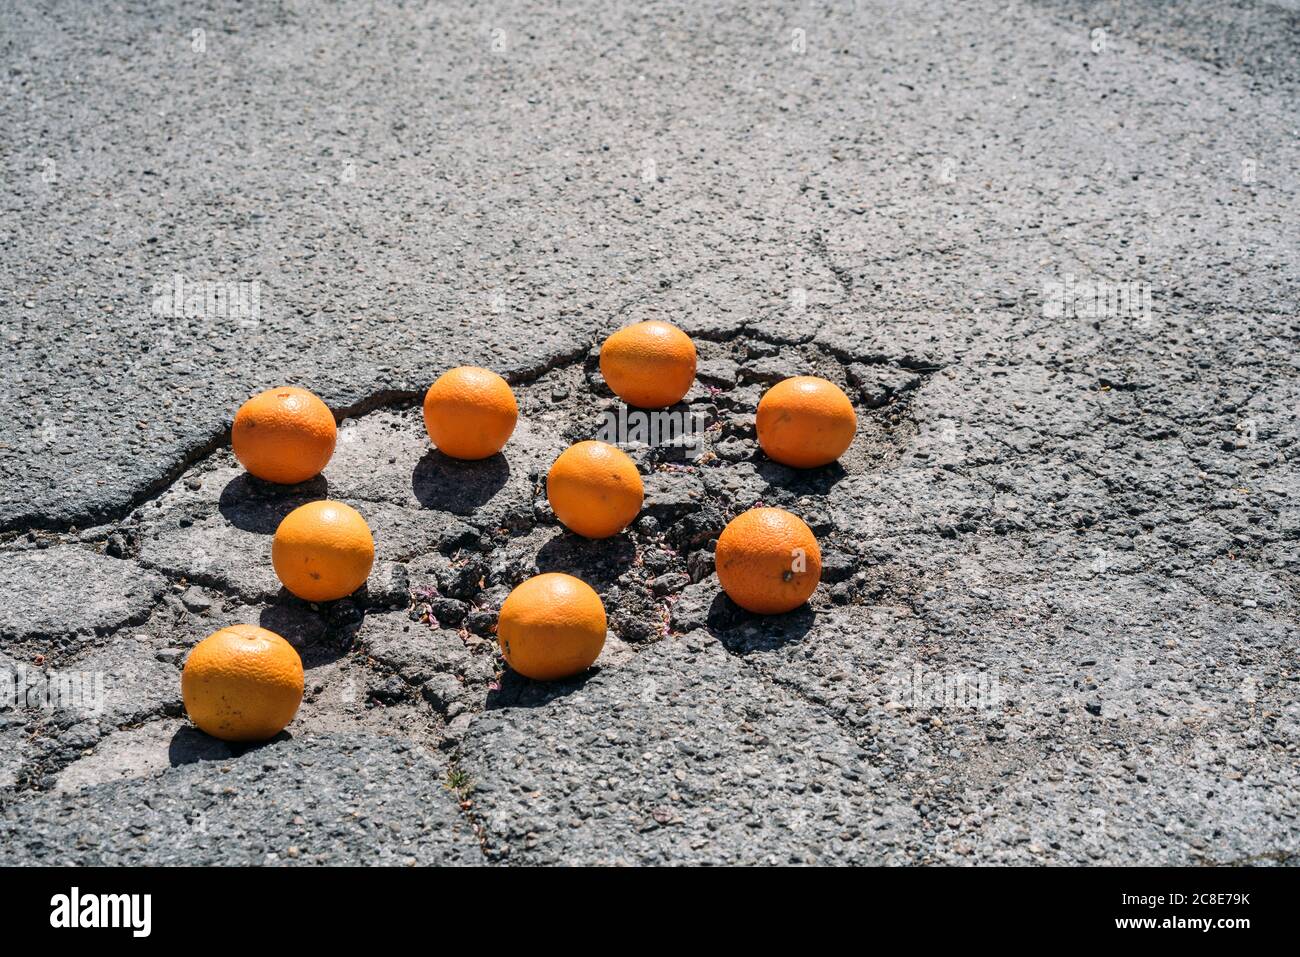 Group of oranges lying in asphalt cracks # Stock Photo